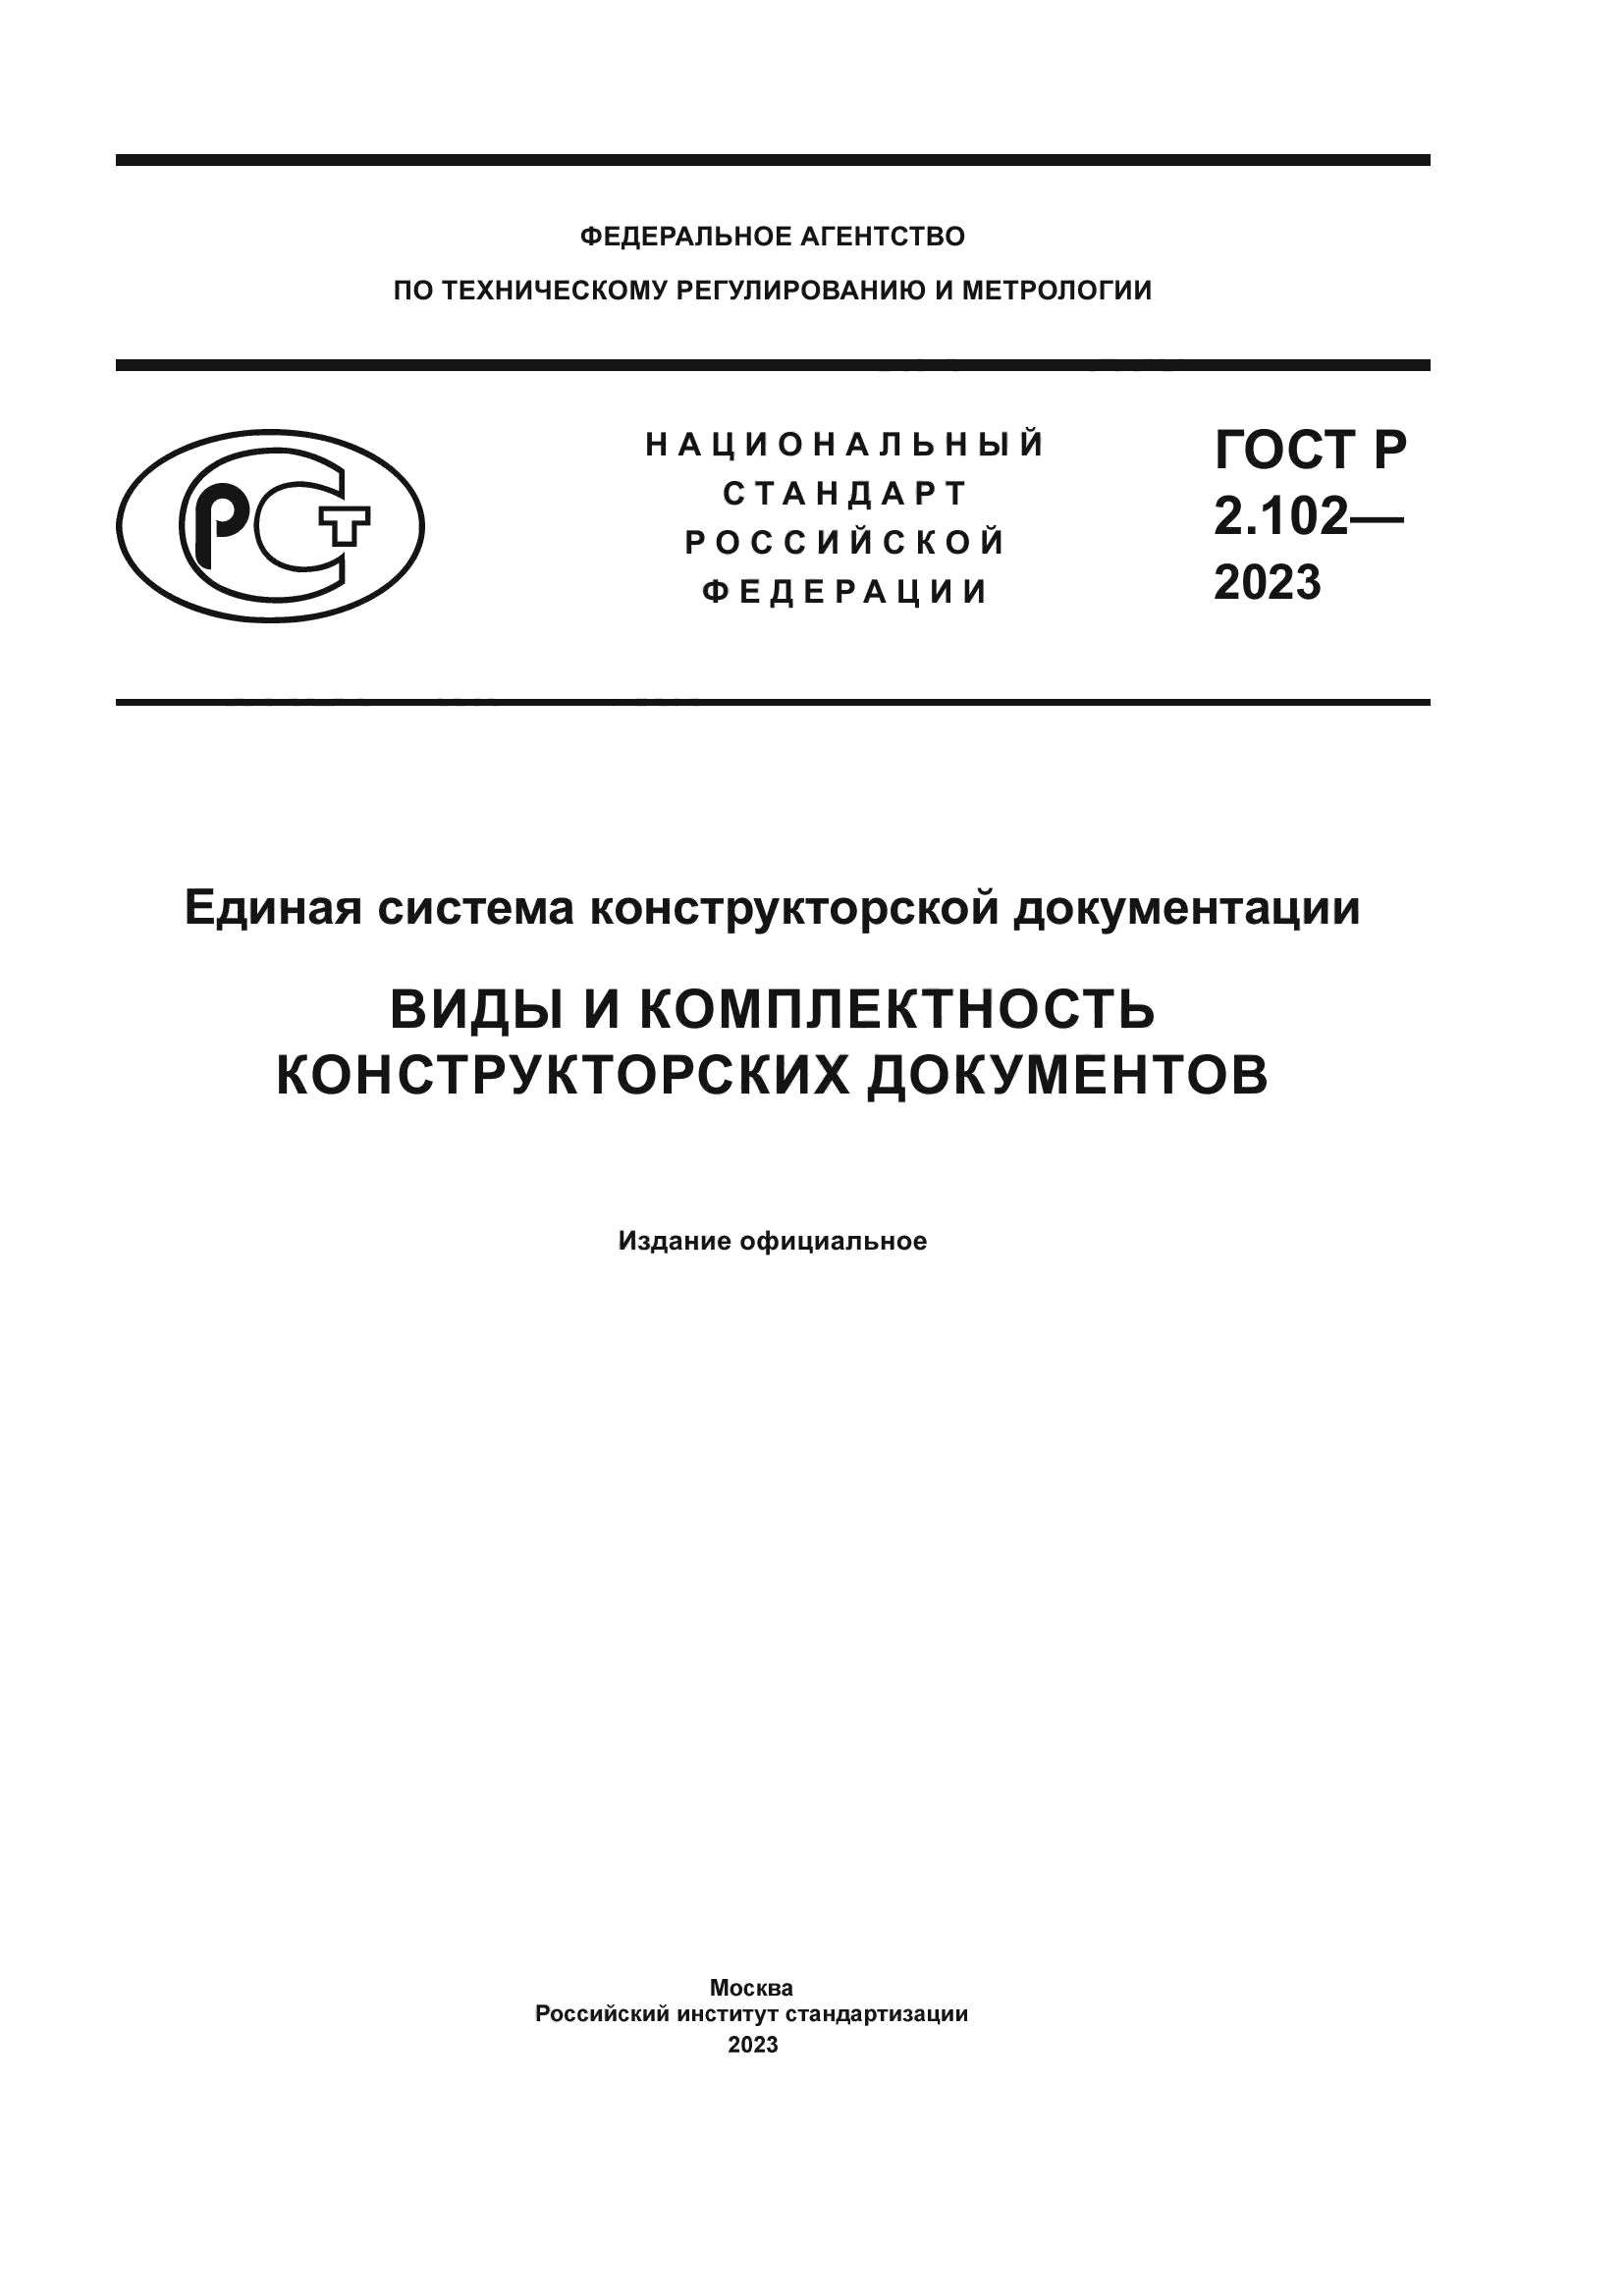 ГОСТ Р 2.102-2023